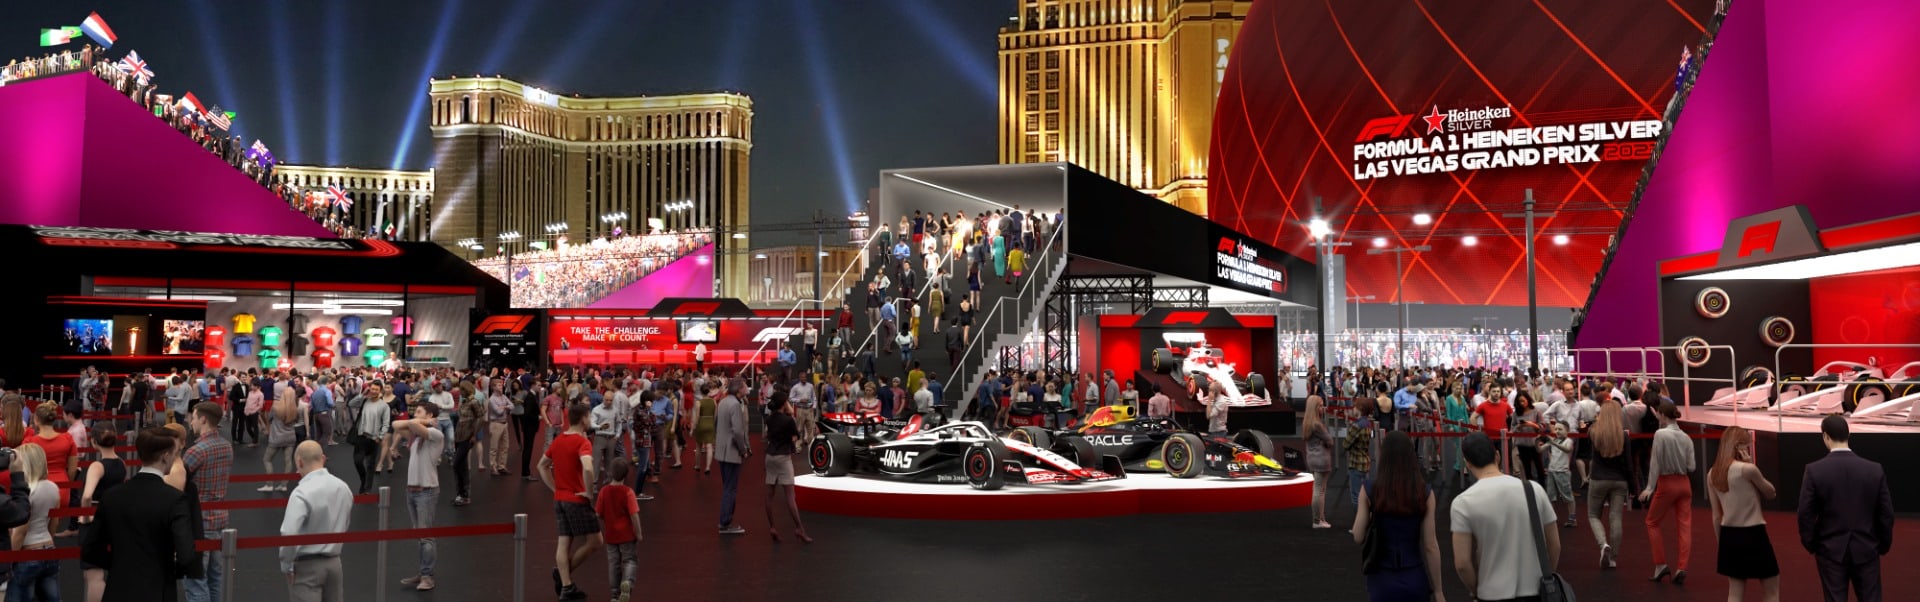 F1 Heineken Silver Las Vegas Grand Prix sells out Paddock Club